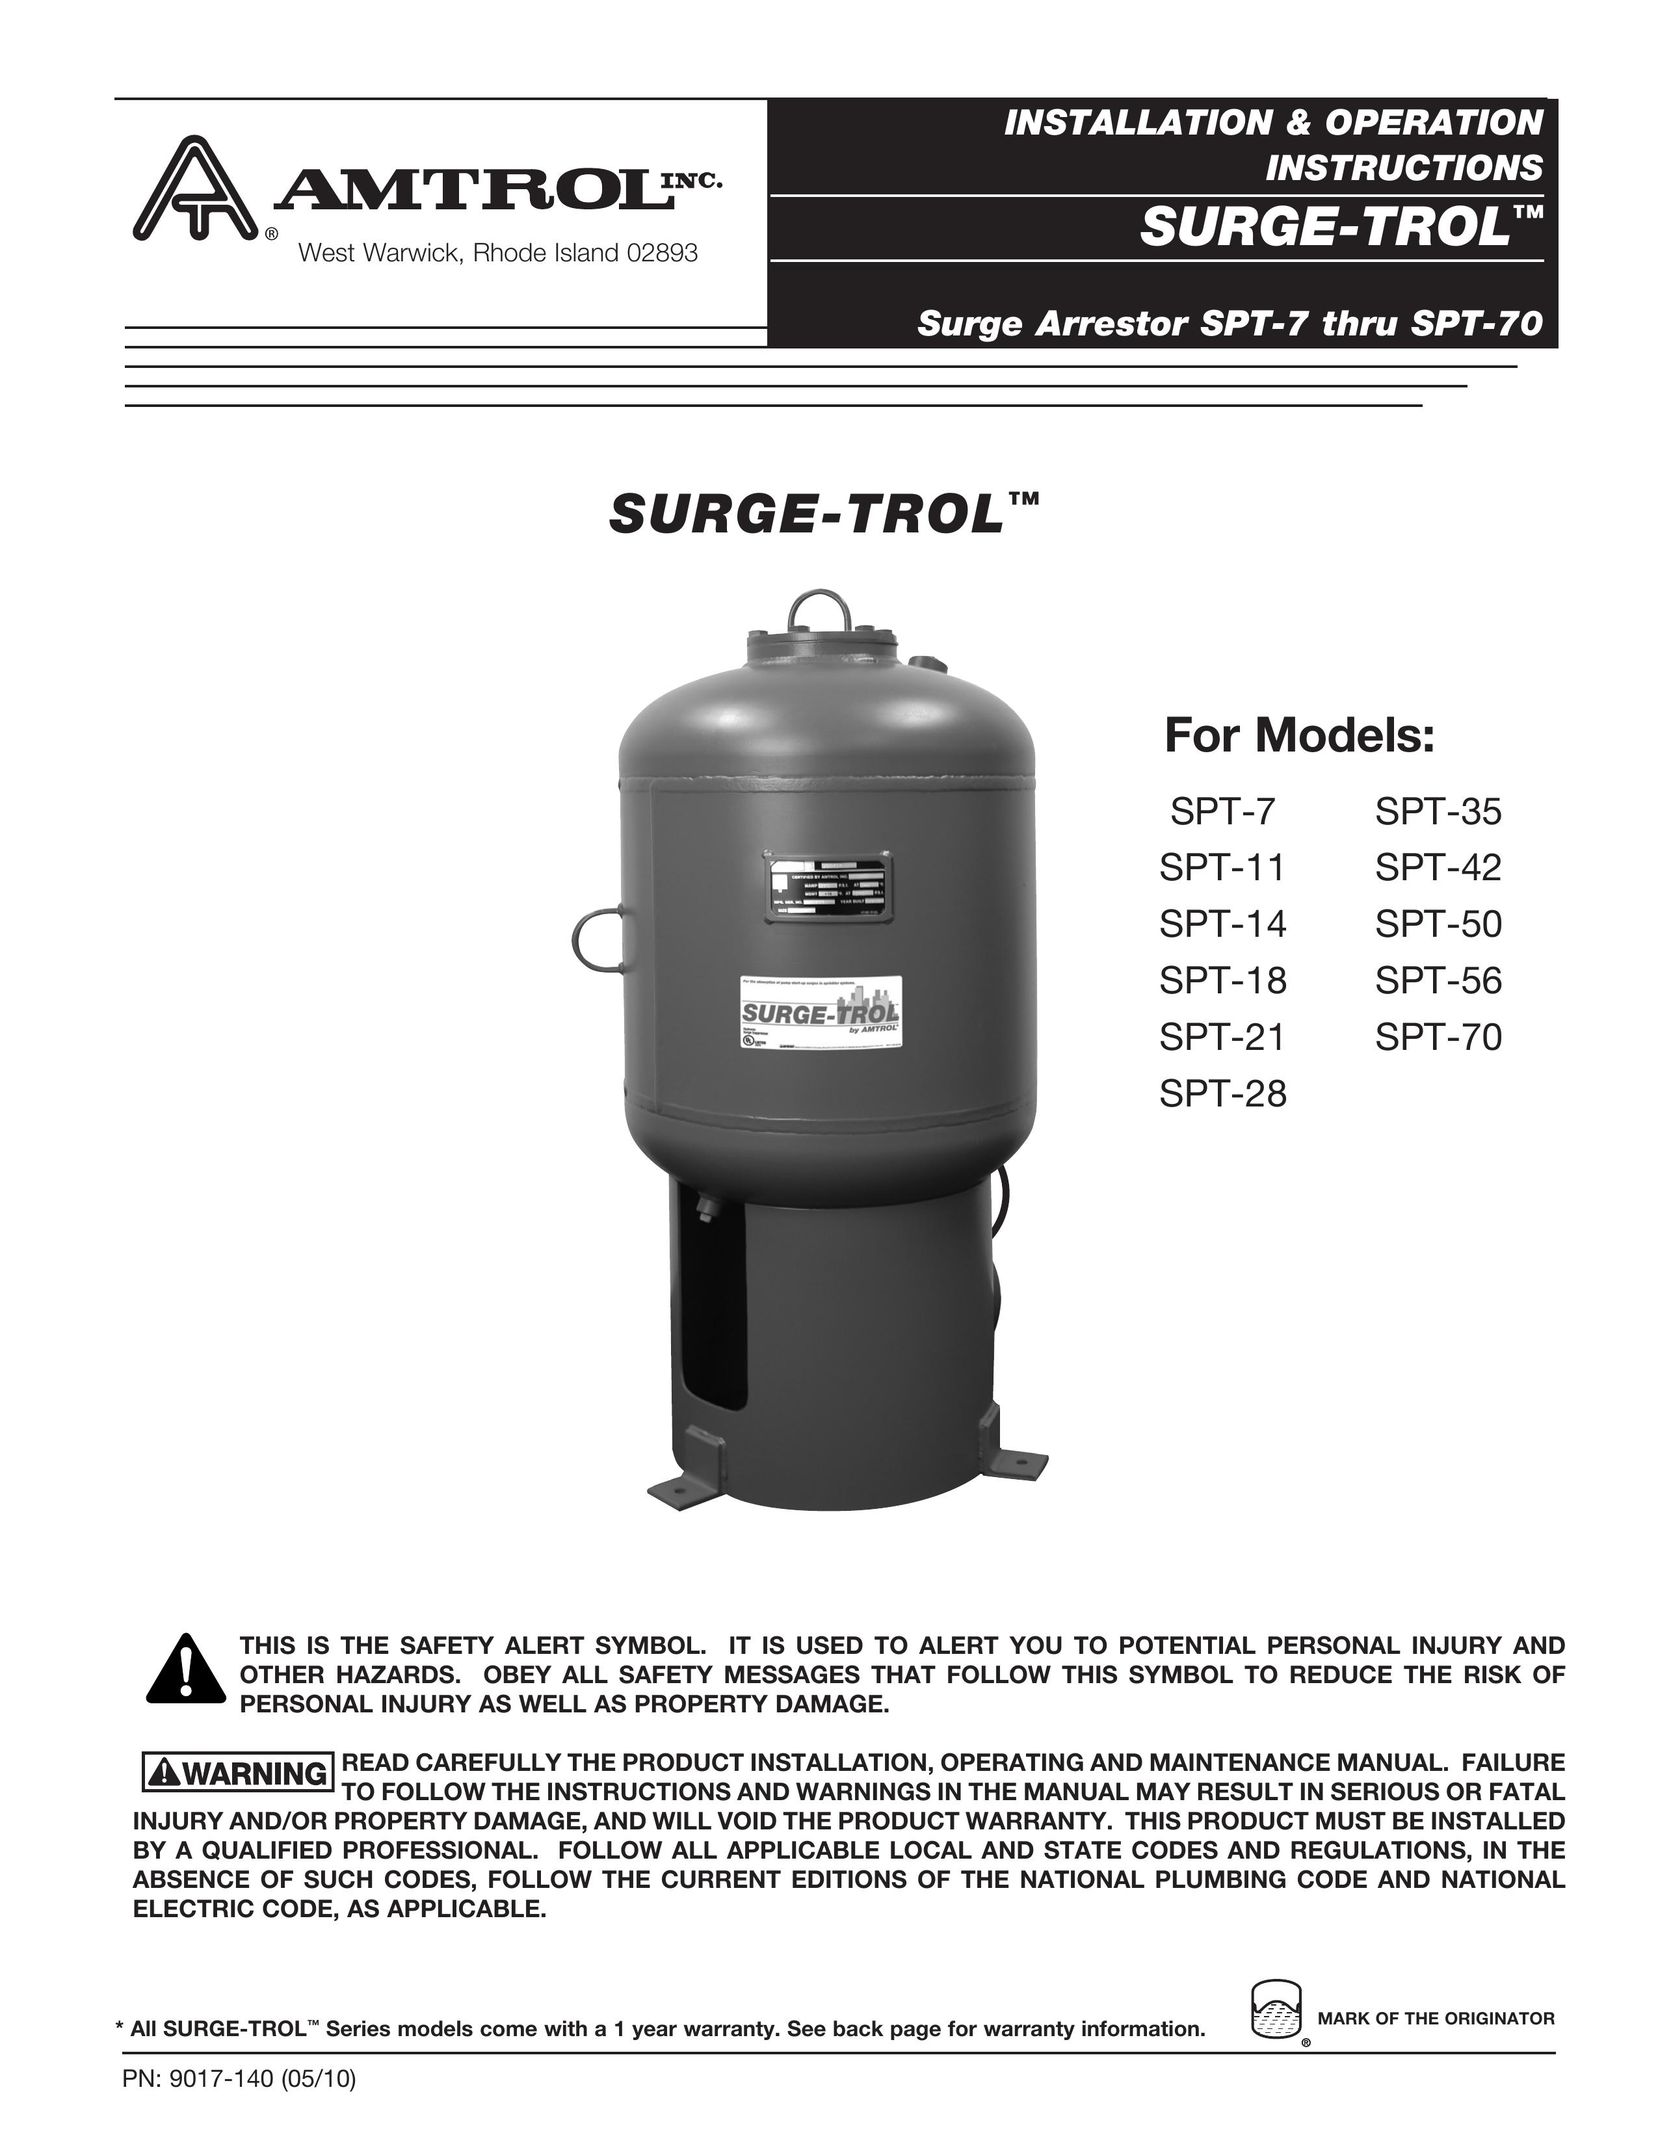 Amtrol SPT-21 Surge Protector User Manual